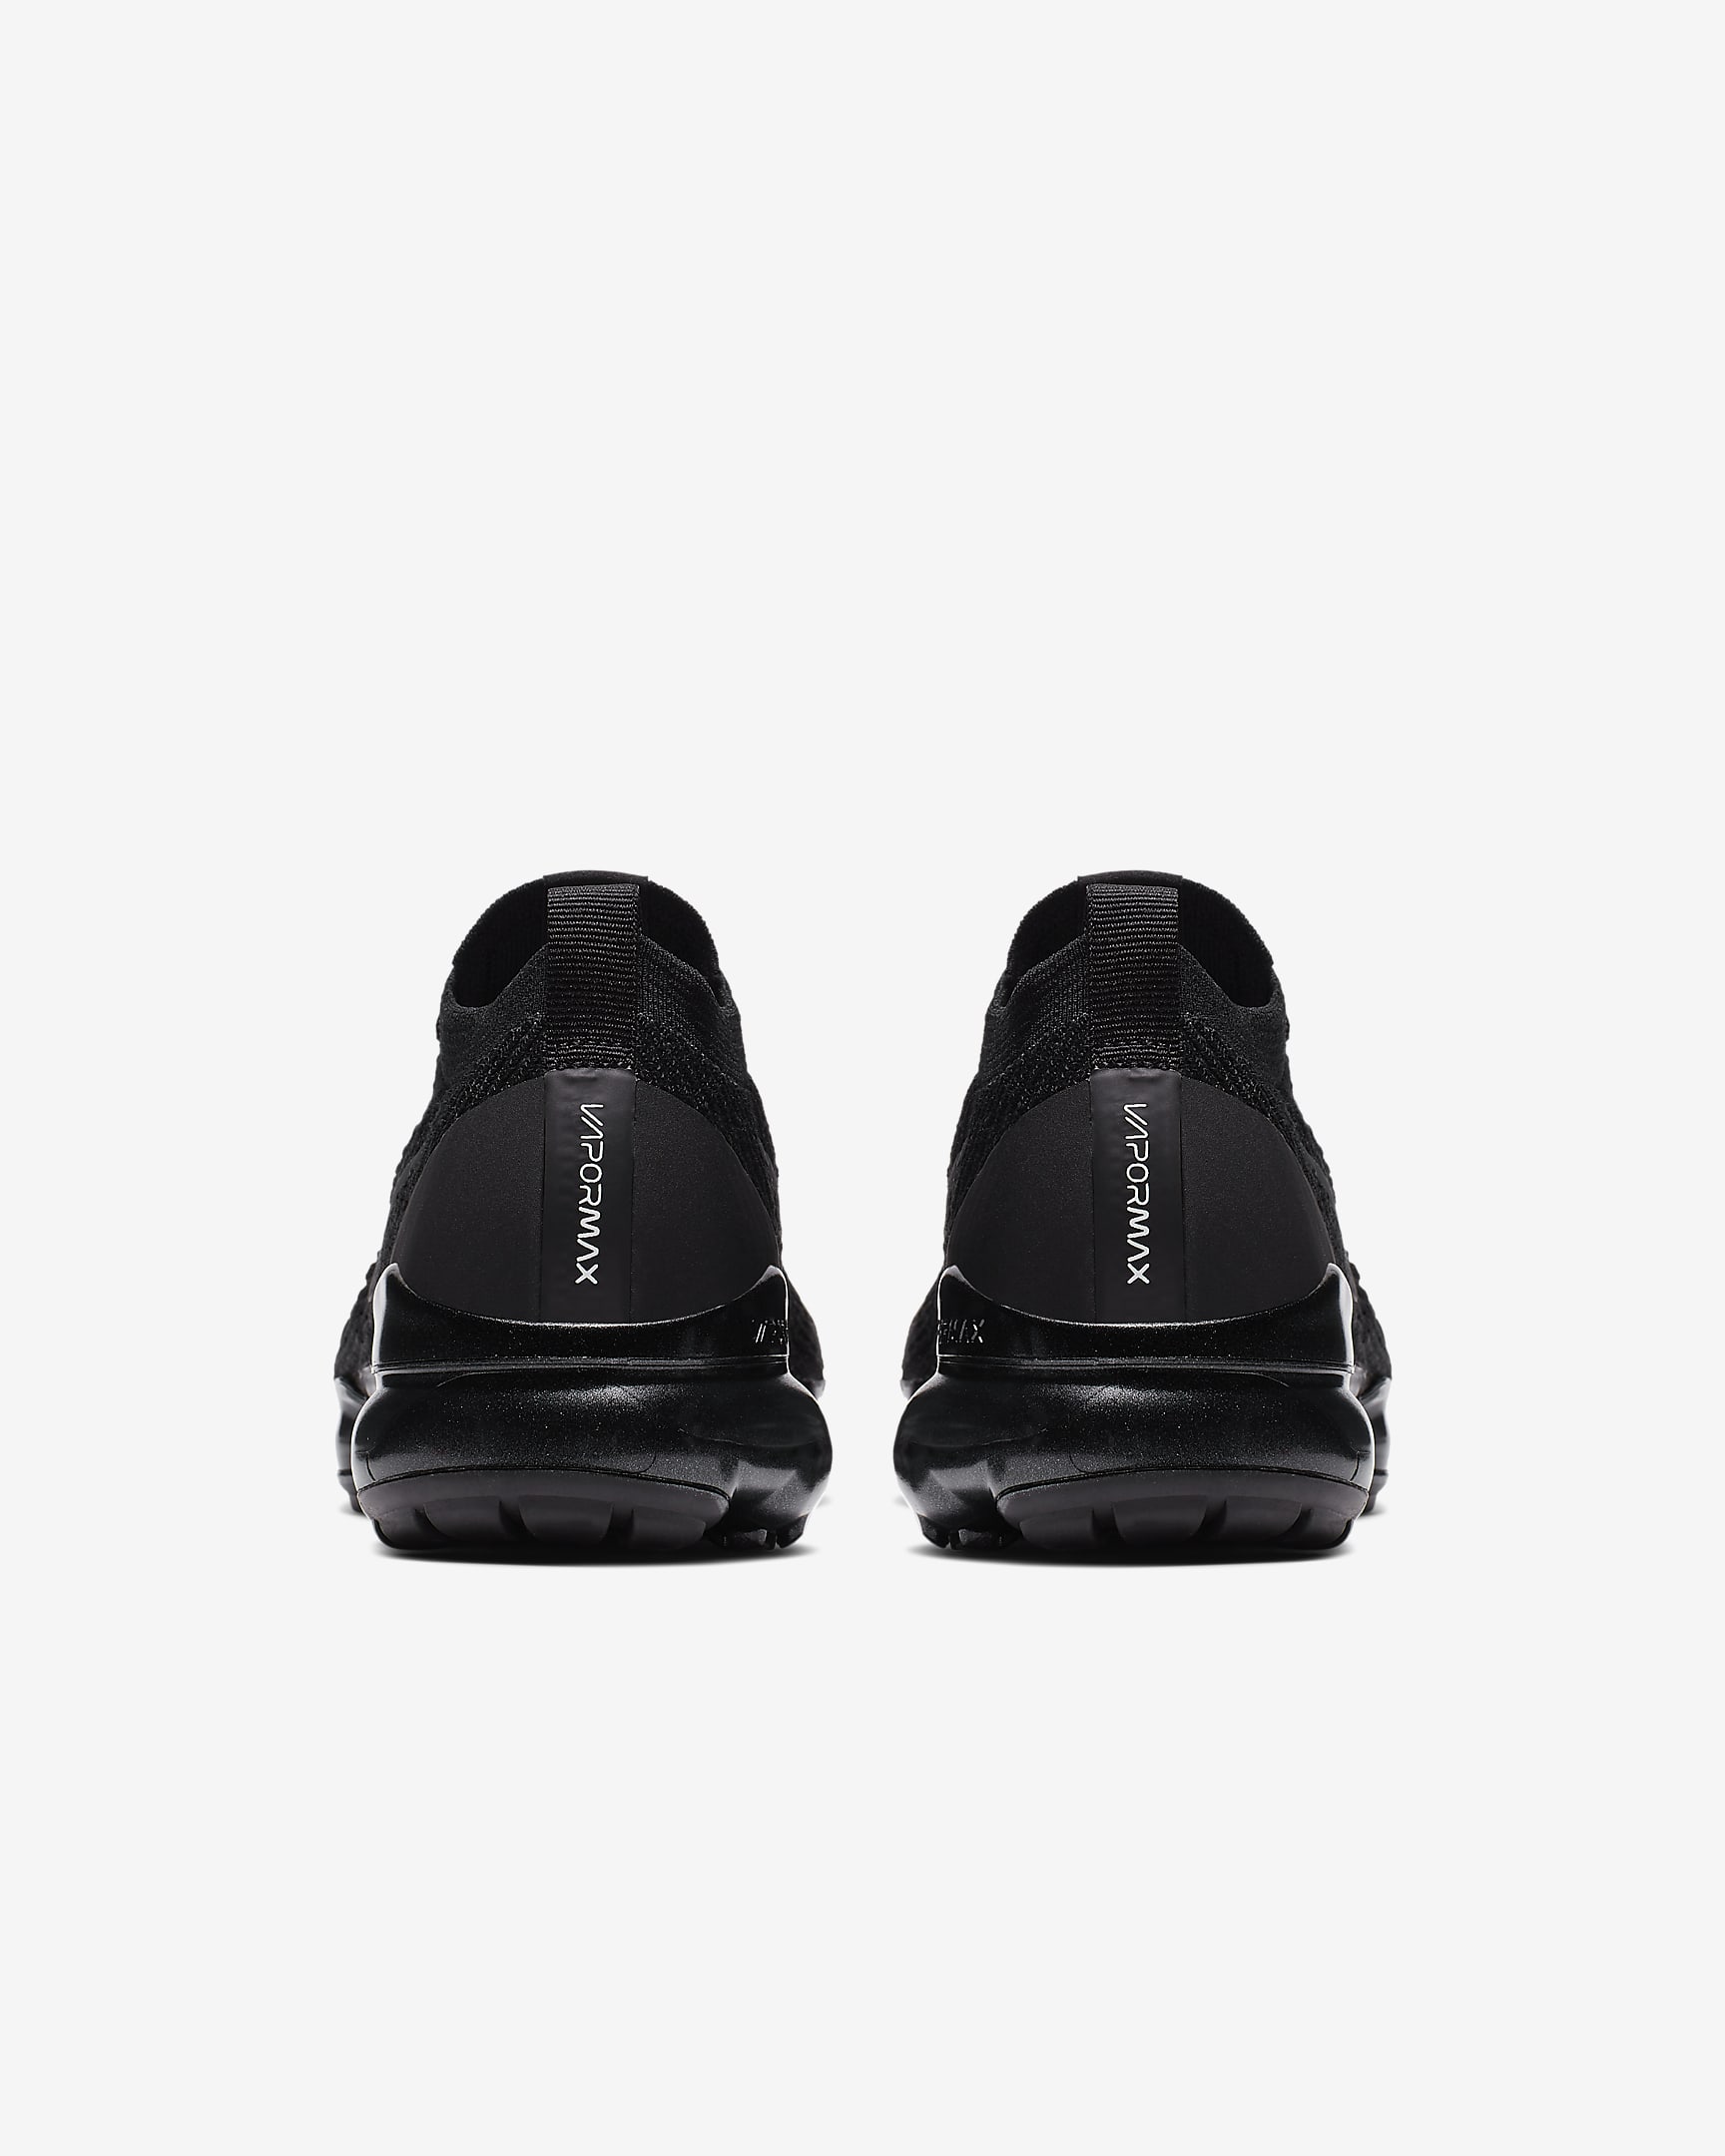 Nike Air VaporMax Flyknit 3 Women's Shoes - Black/White/Metallic Silver/Anthracite